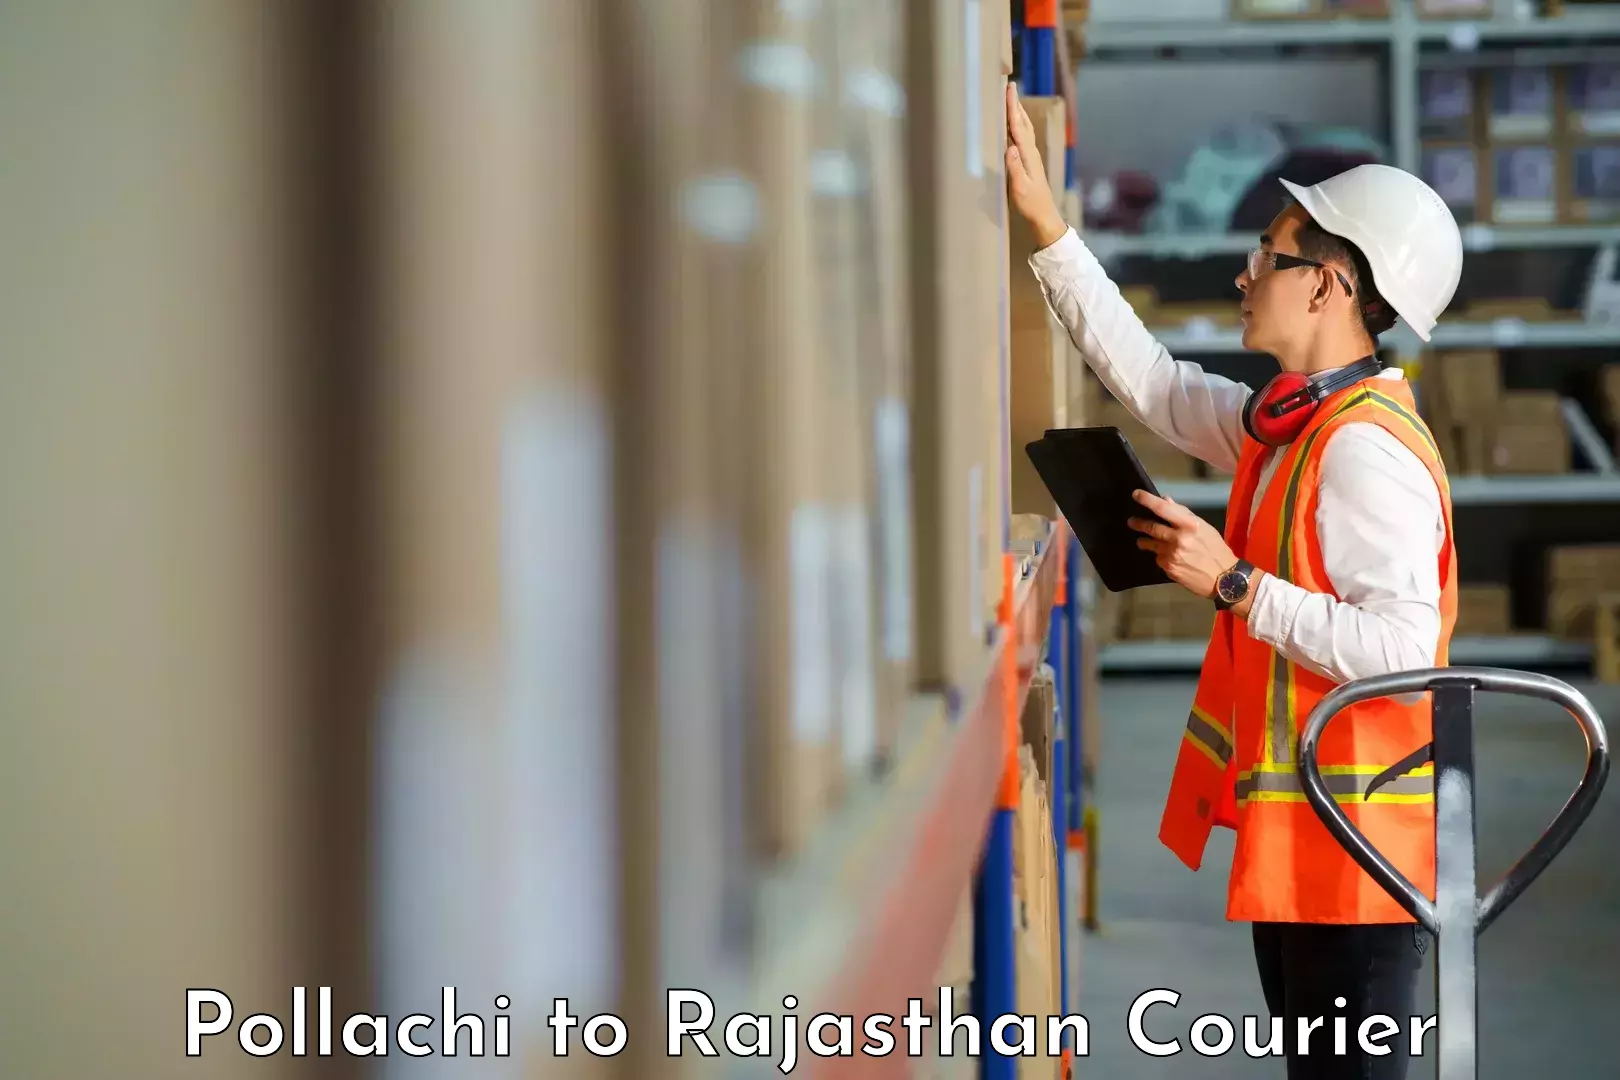 Digital courier platforms Pollachi to Pilani